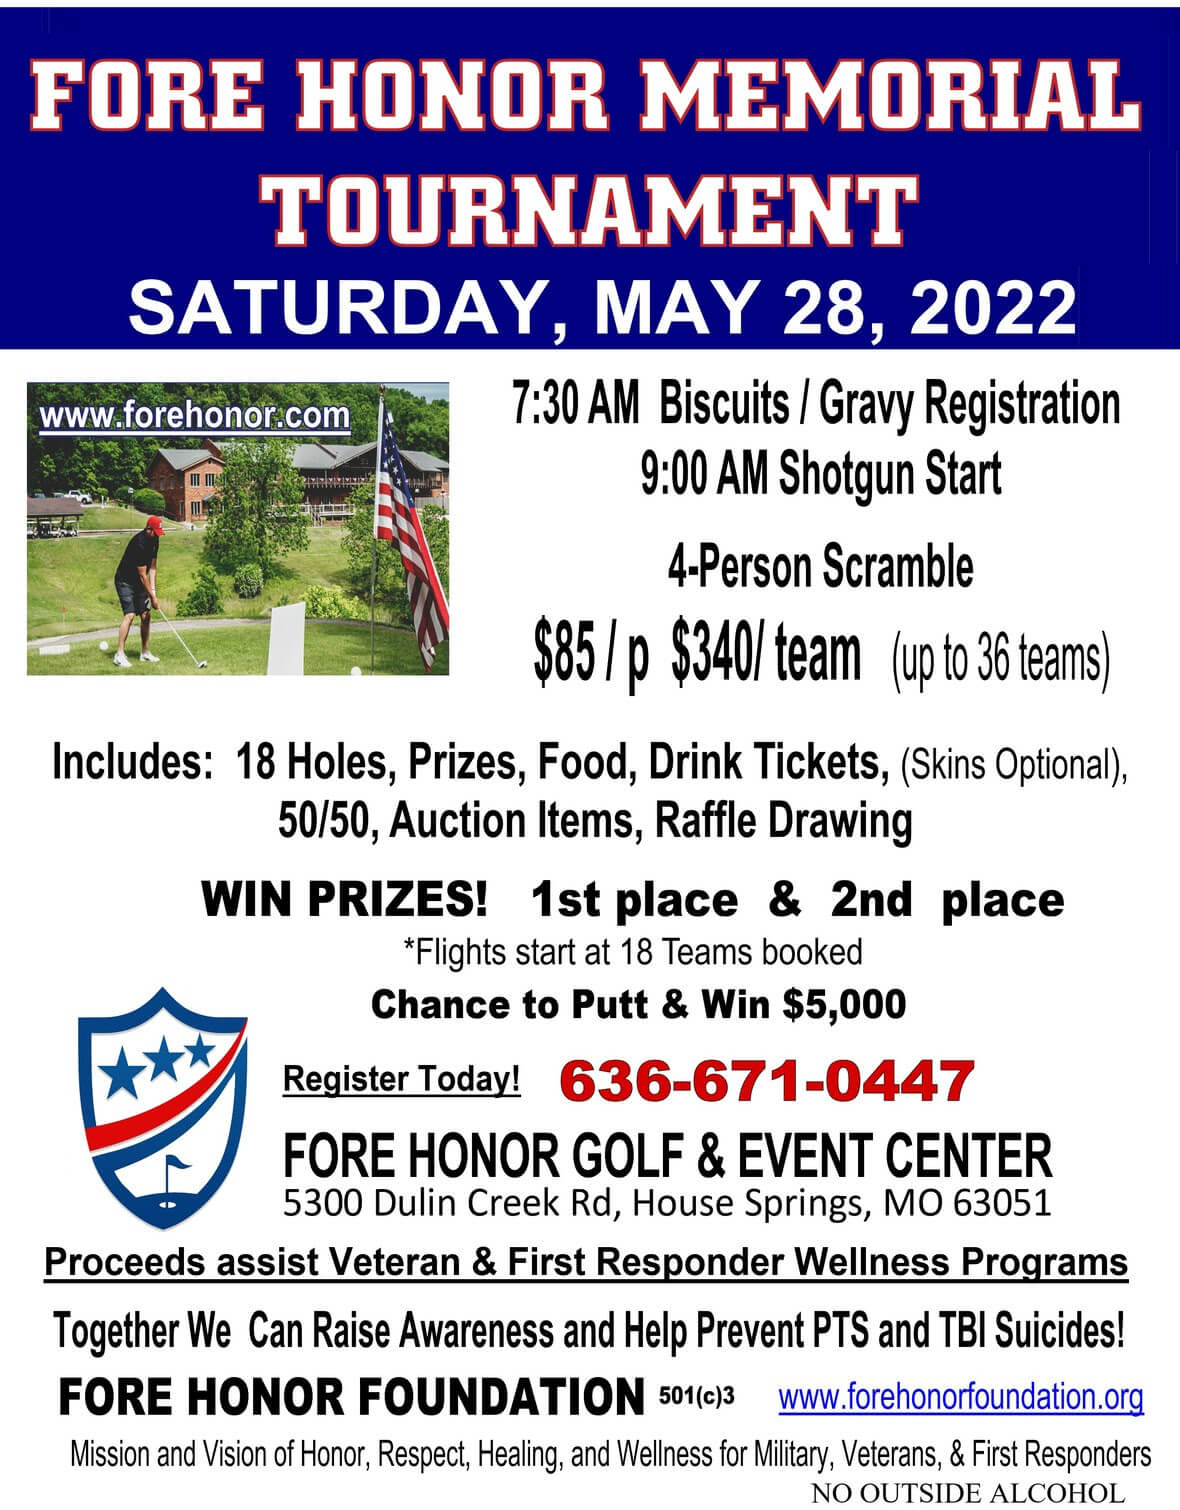 Golf Tournament on Sat Aug 7th 2021